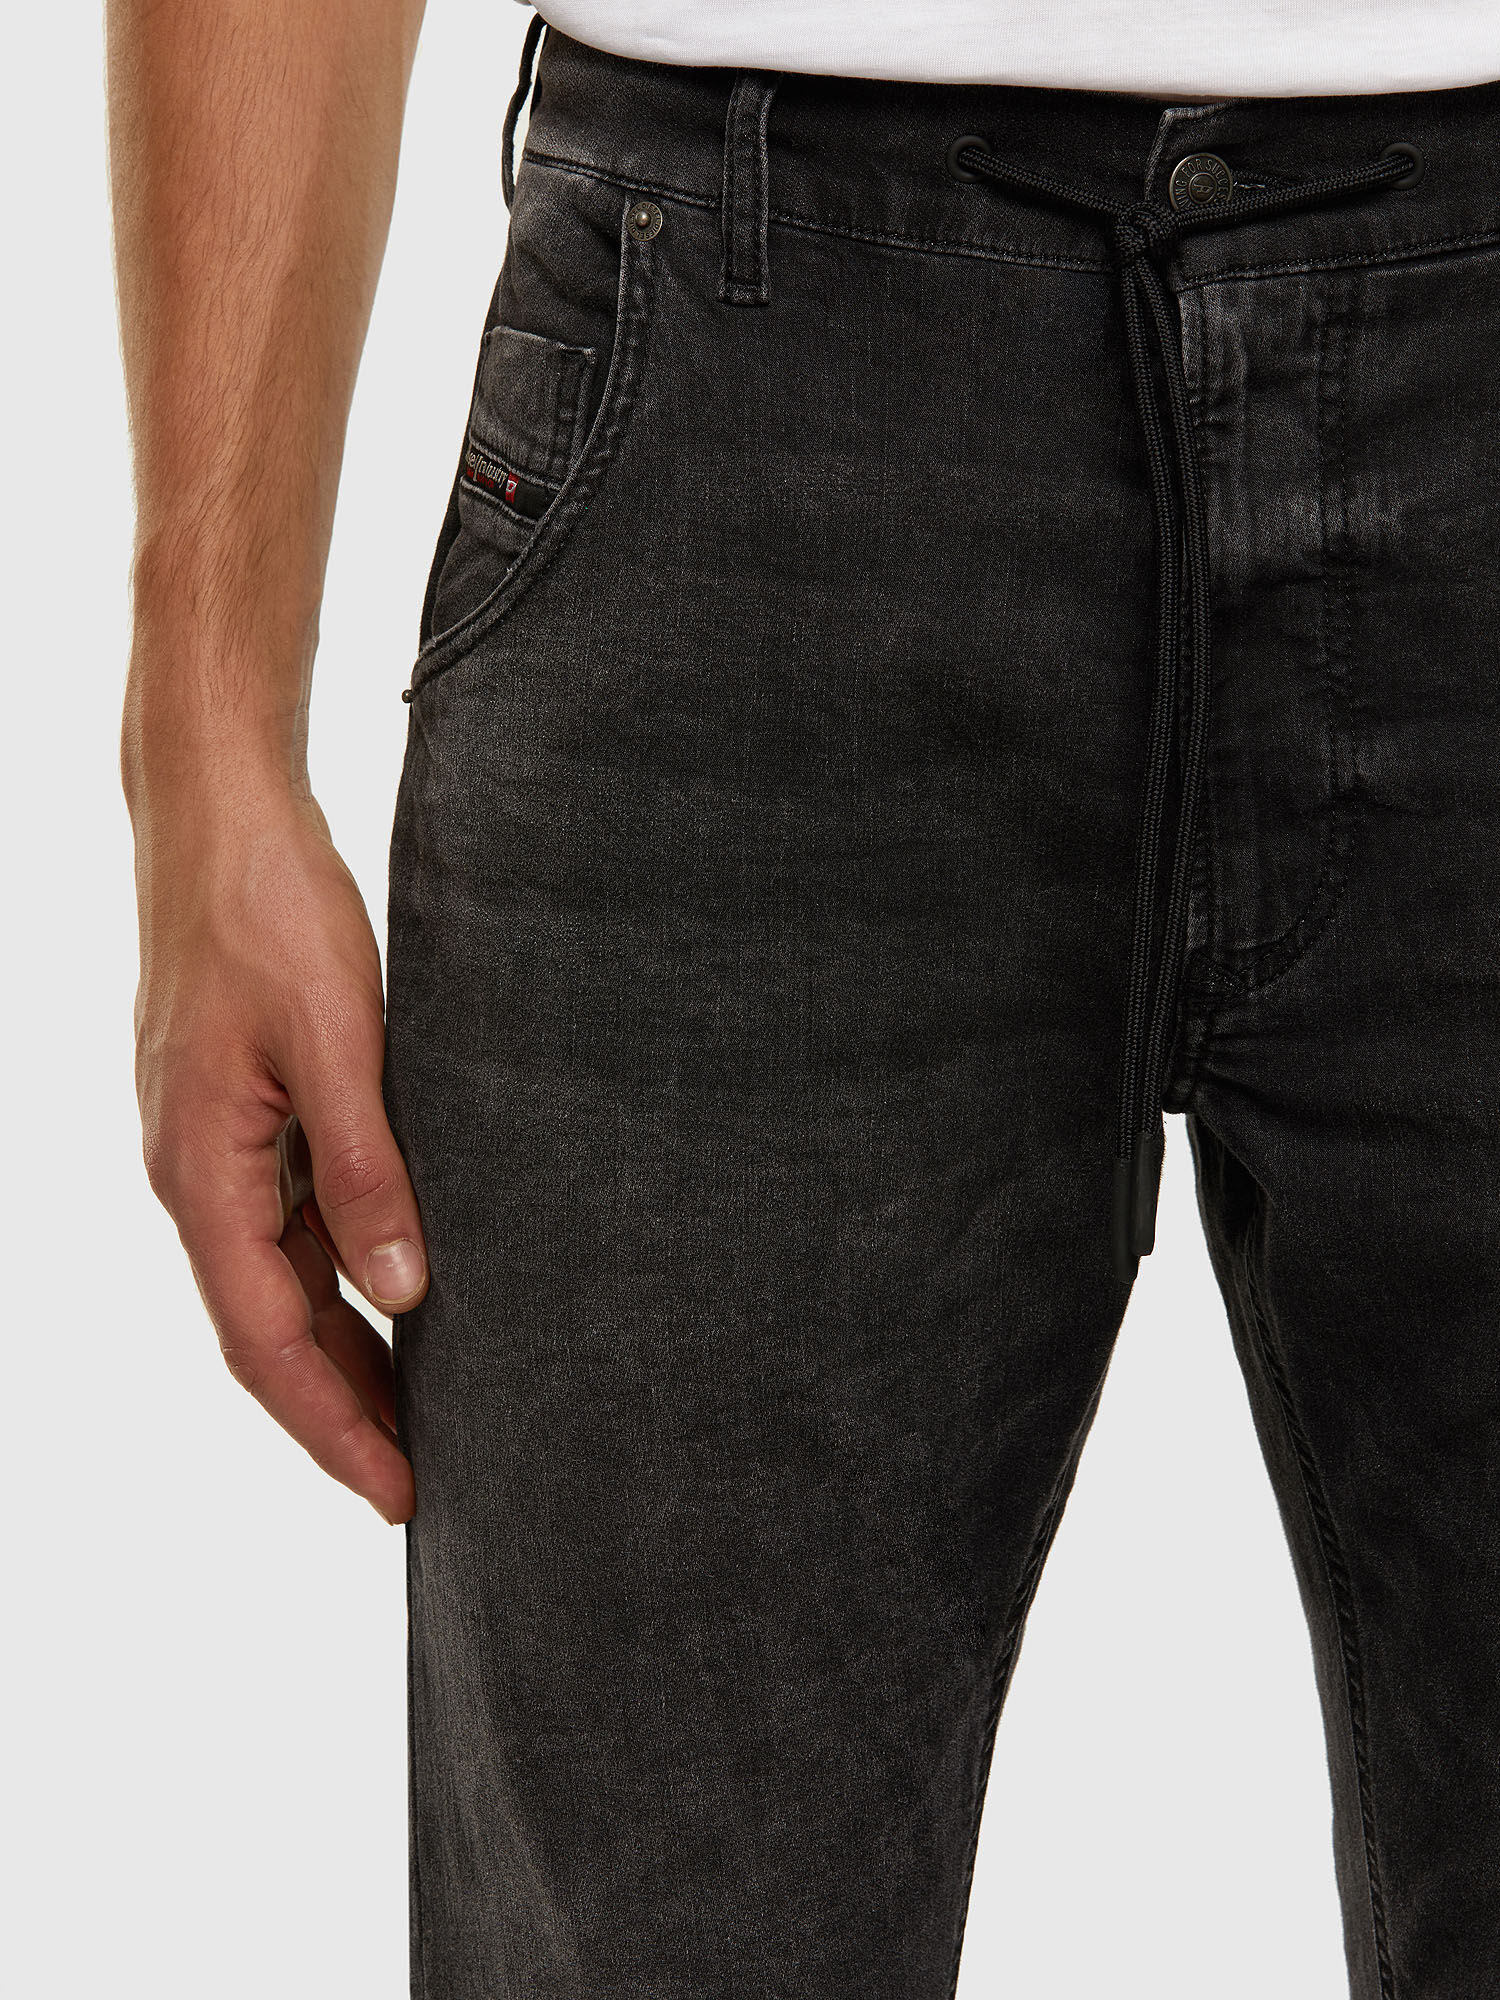 Krooley JoggJeans 009FZ Man: Tapered Black/Dark grey Jeans | Diesel